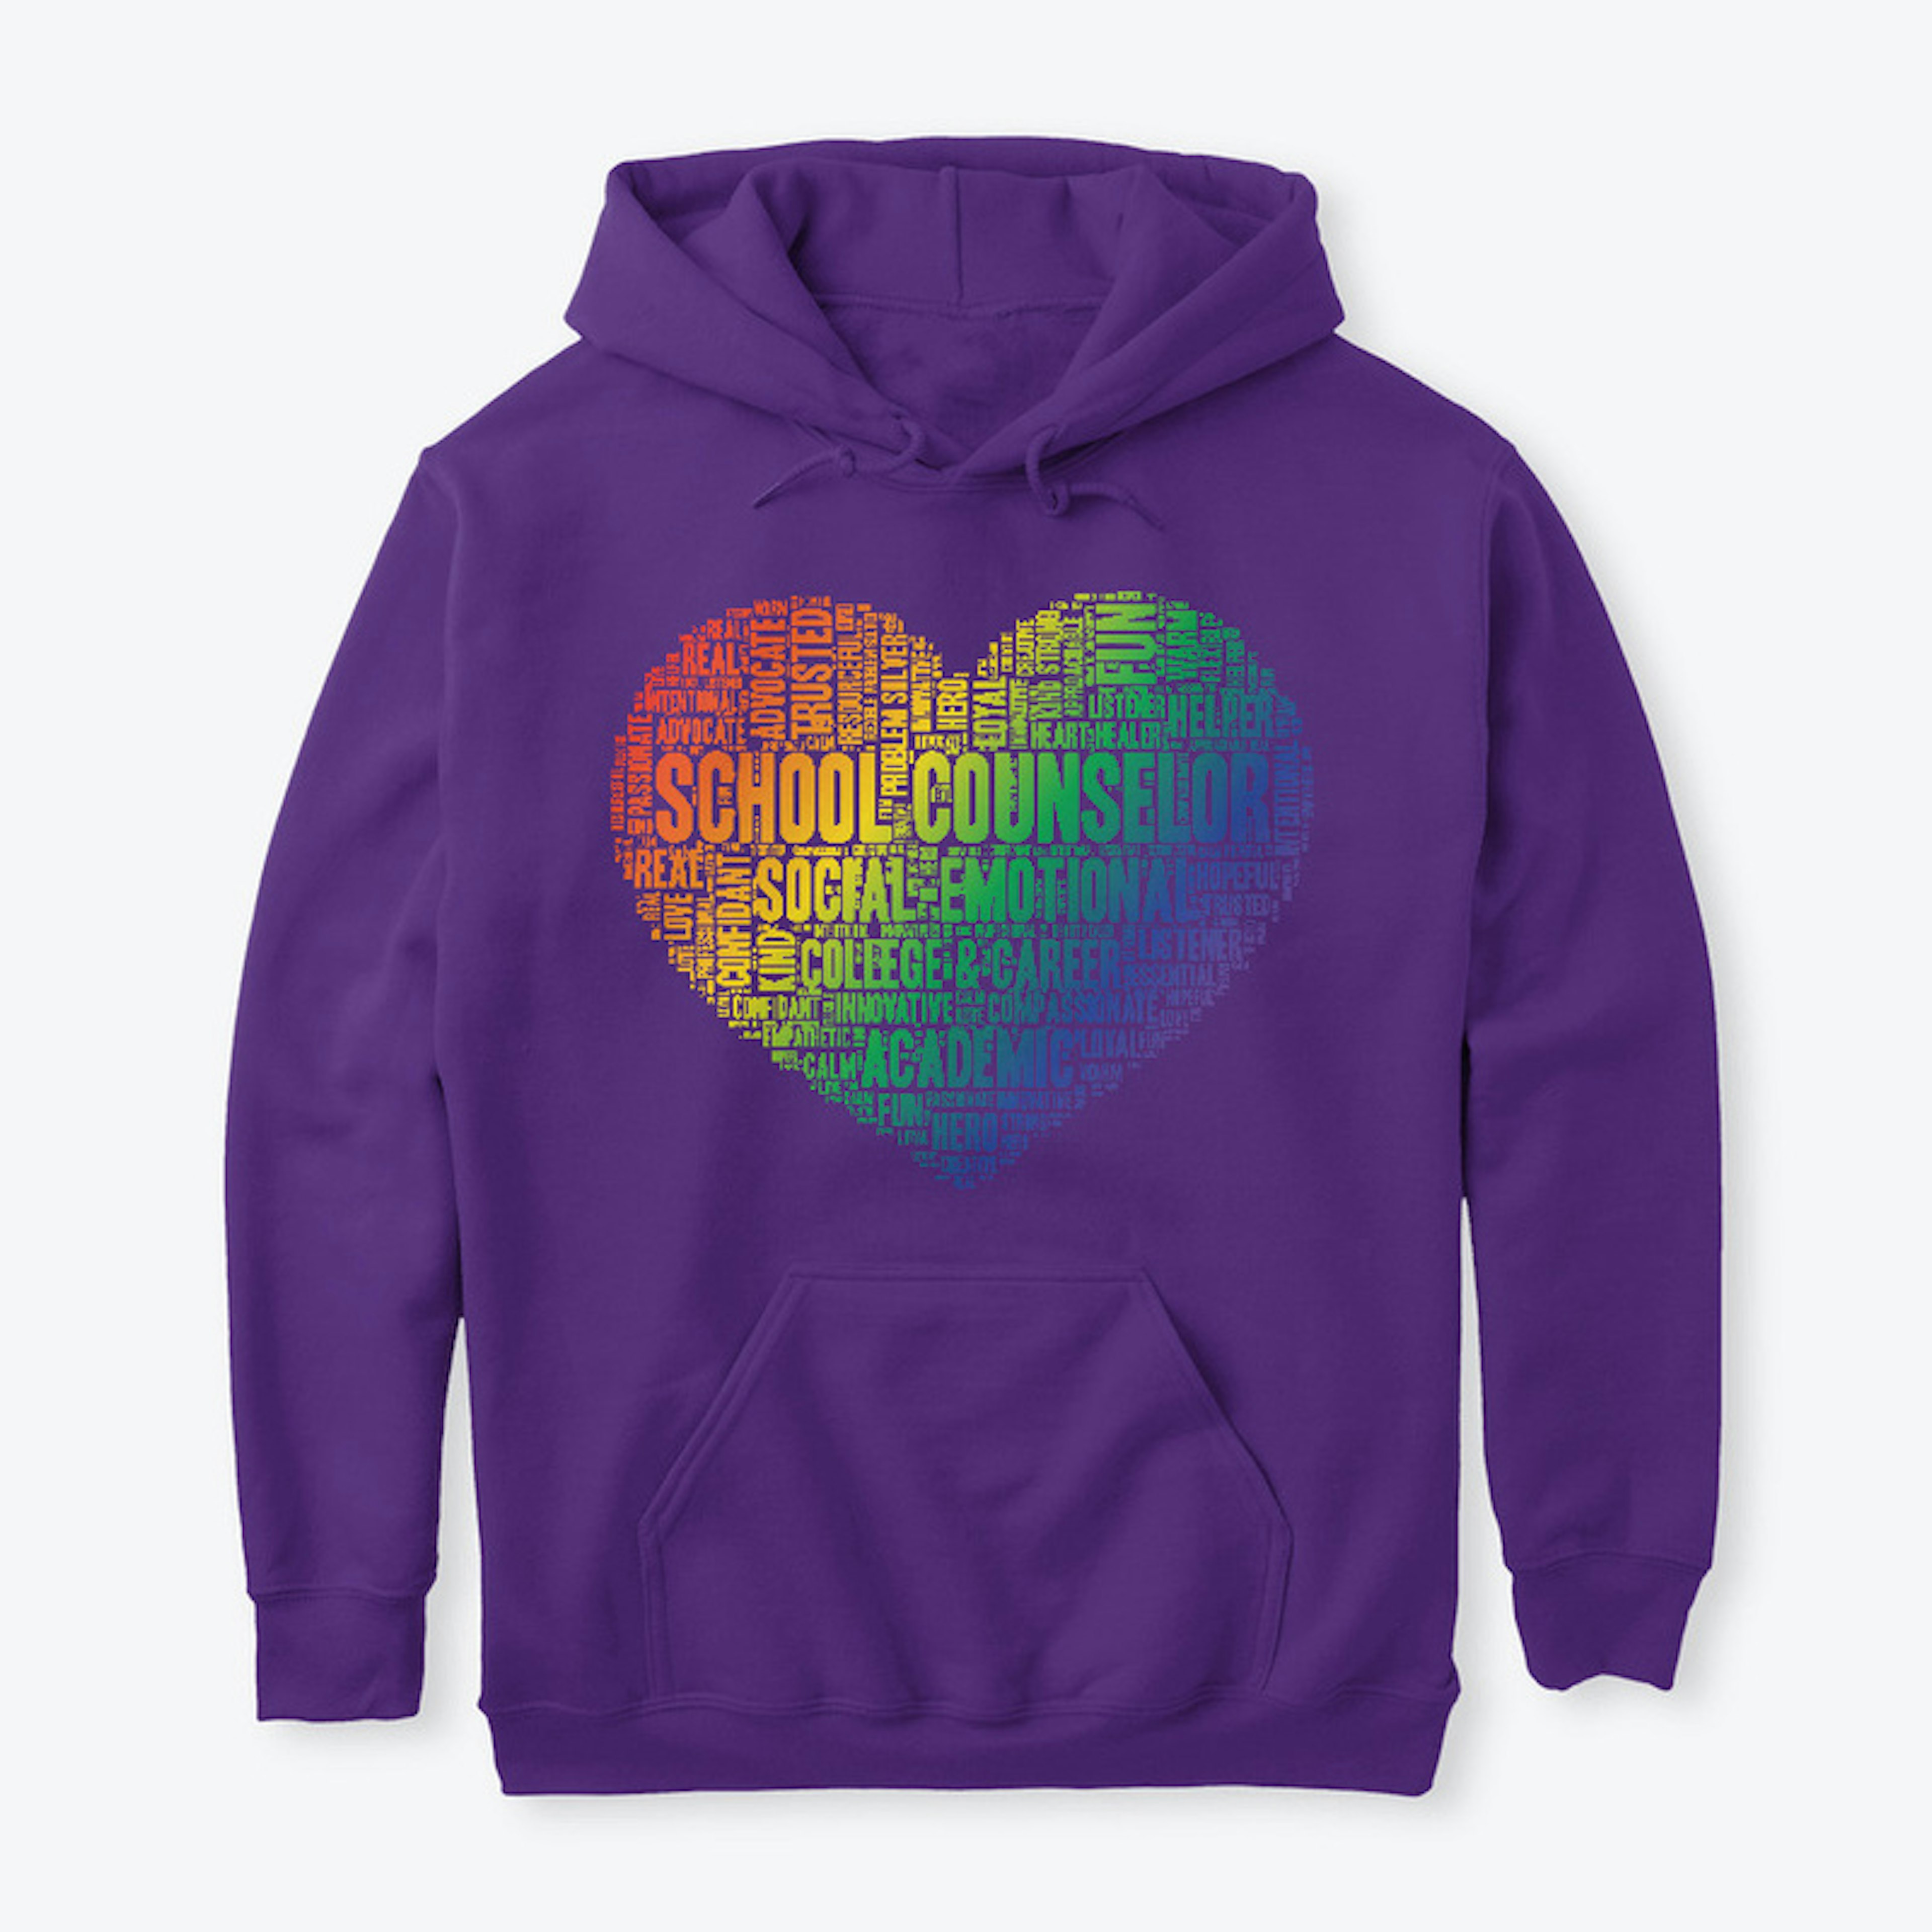 School Counselor Rainbow Heart 